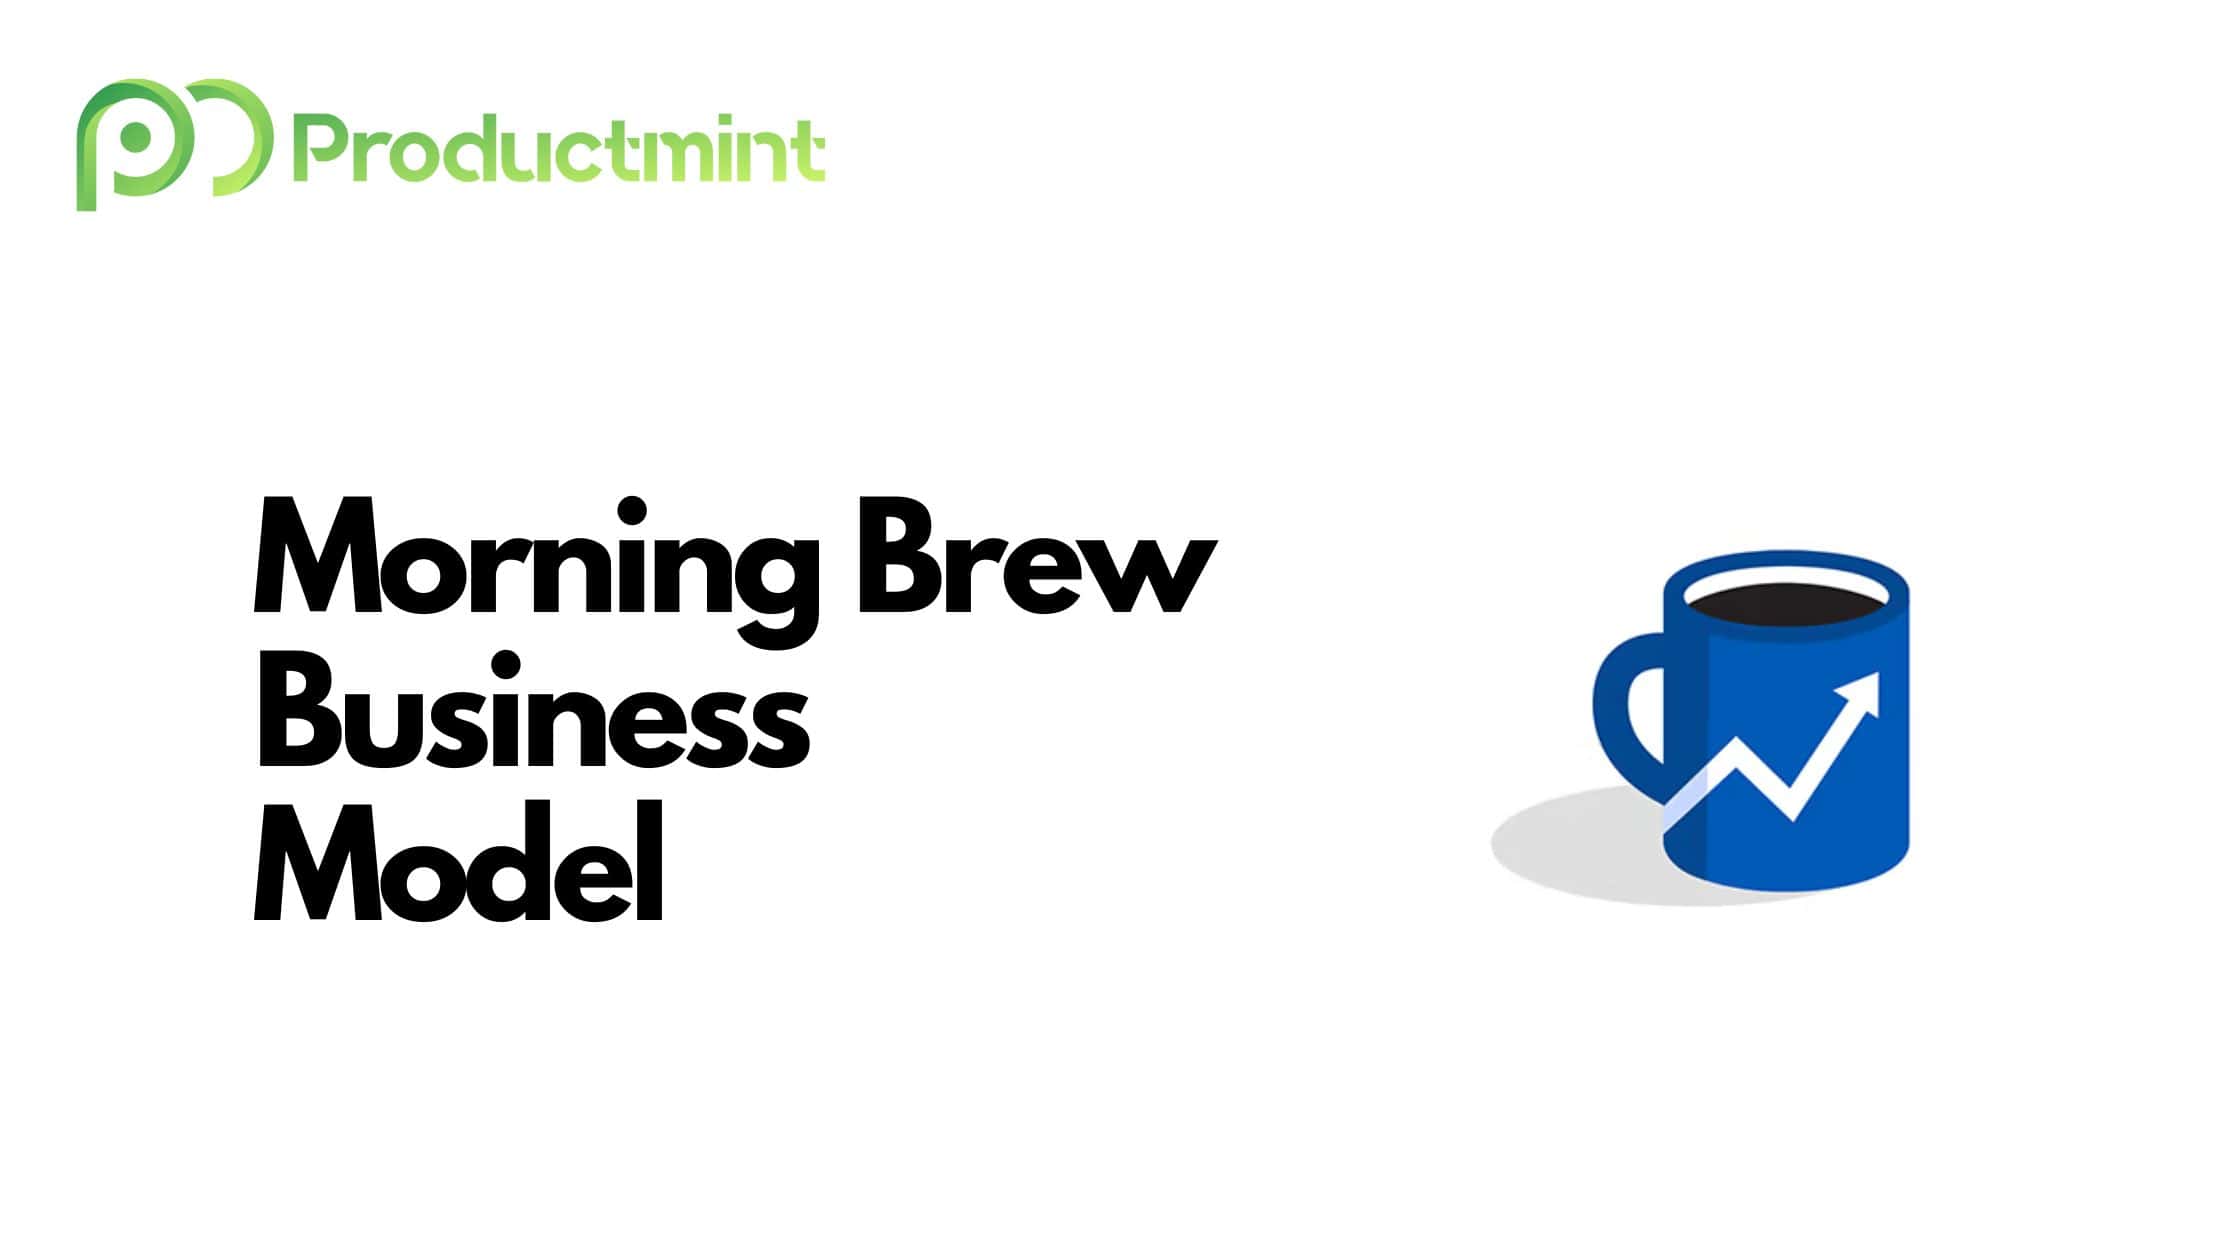 Morning Brew business model